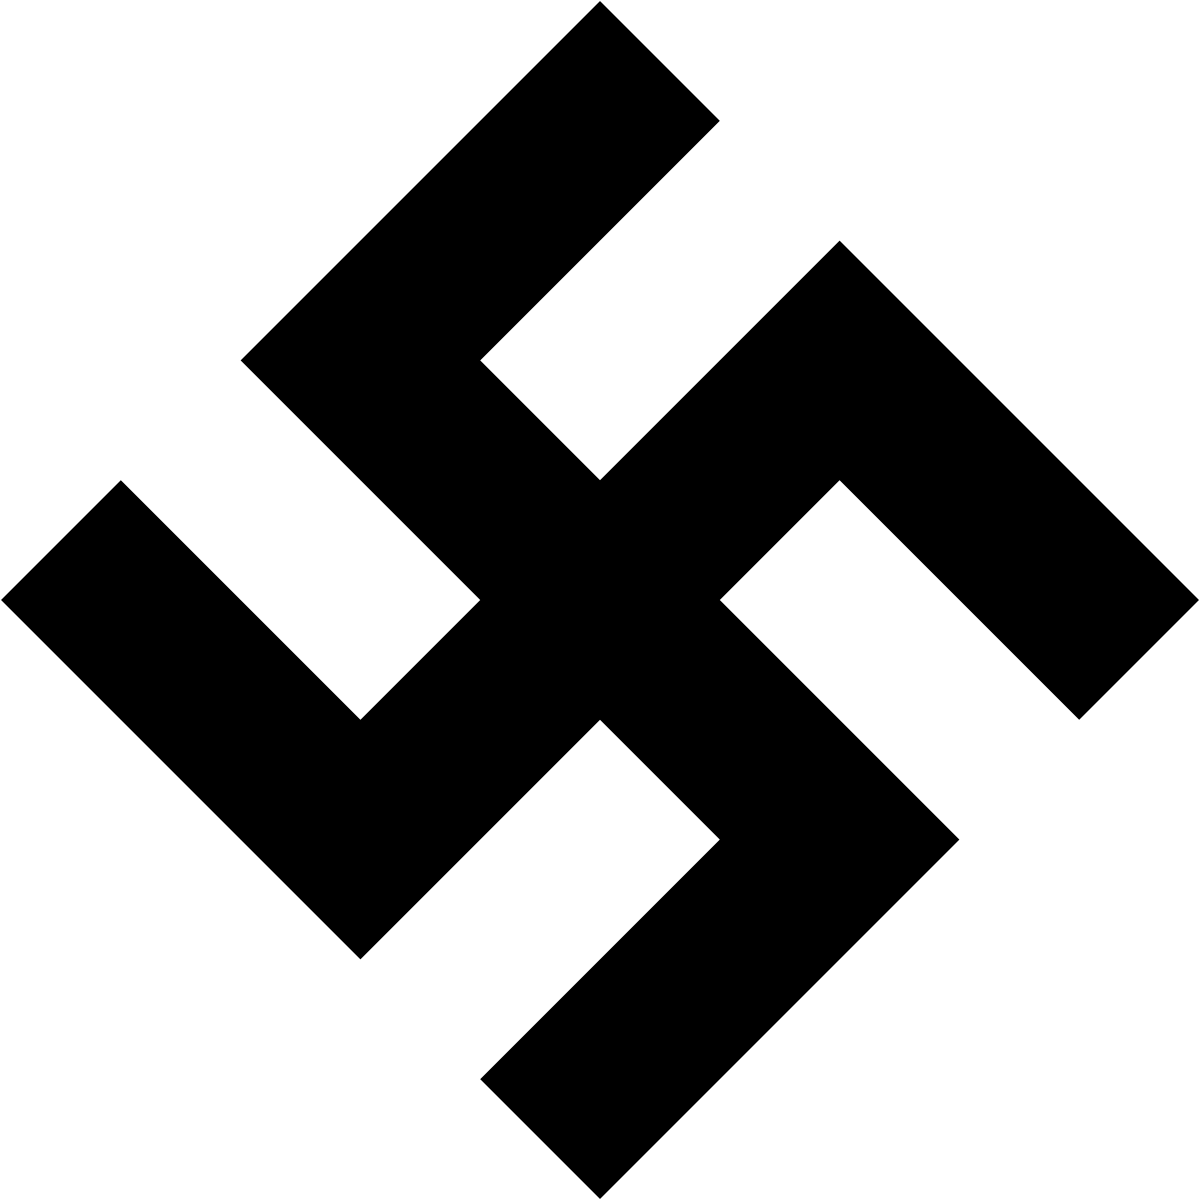 Nazi Logo - Nazi symbolism